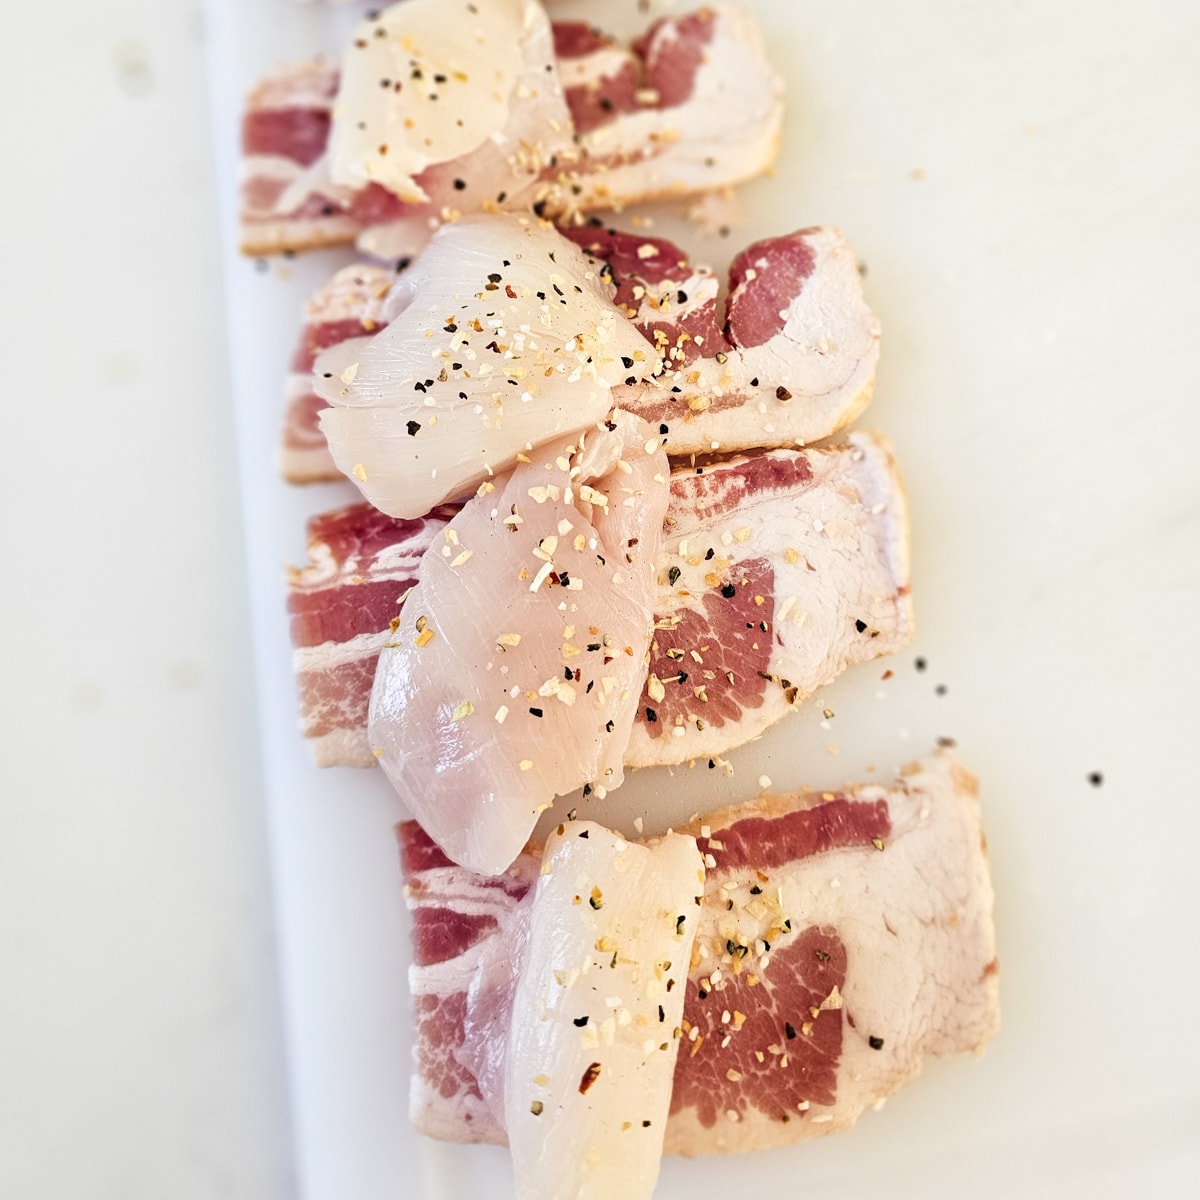 Bacon wrapped halibut cheeks seasoned with BBQ seasoning.